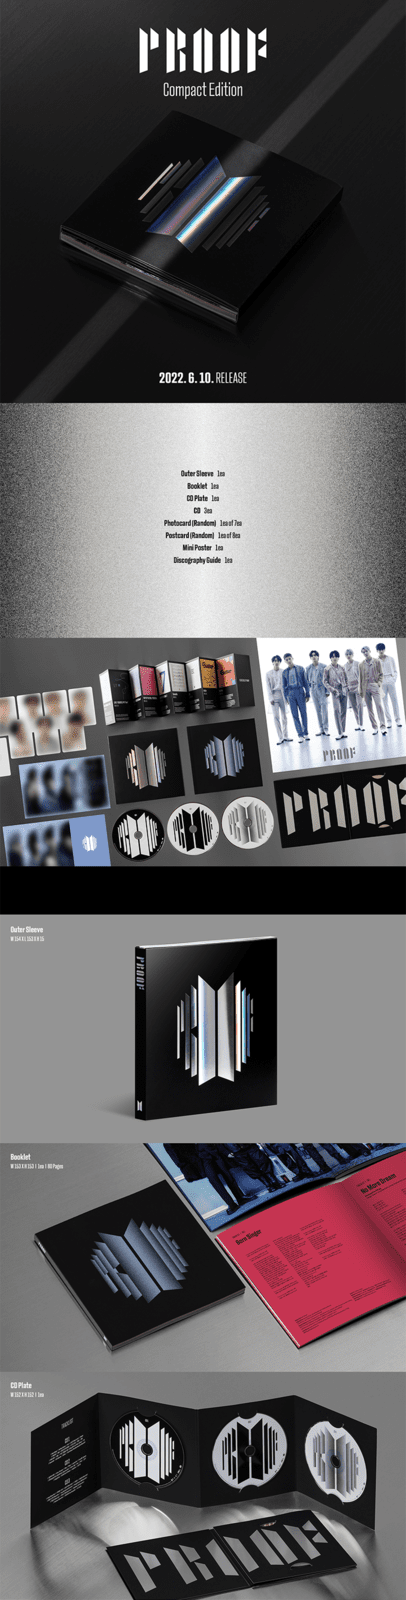 BTS Proof - Album - Compact Edition